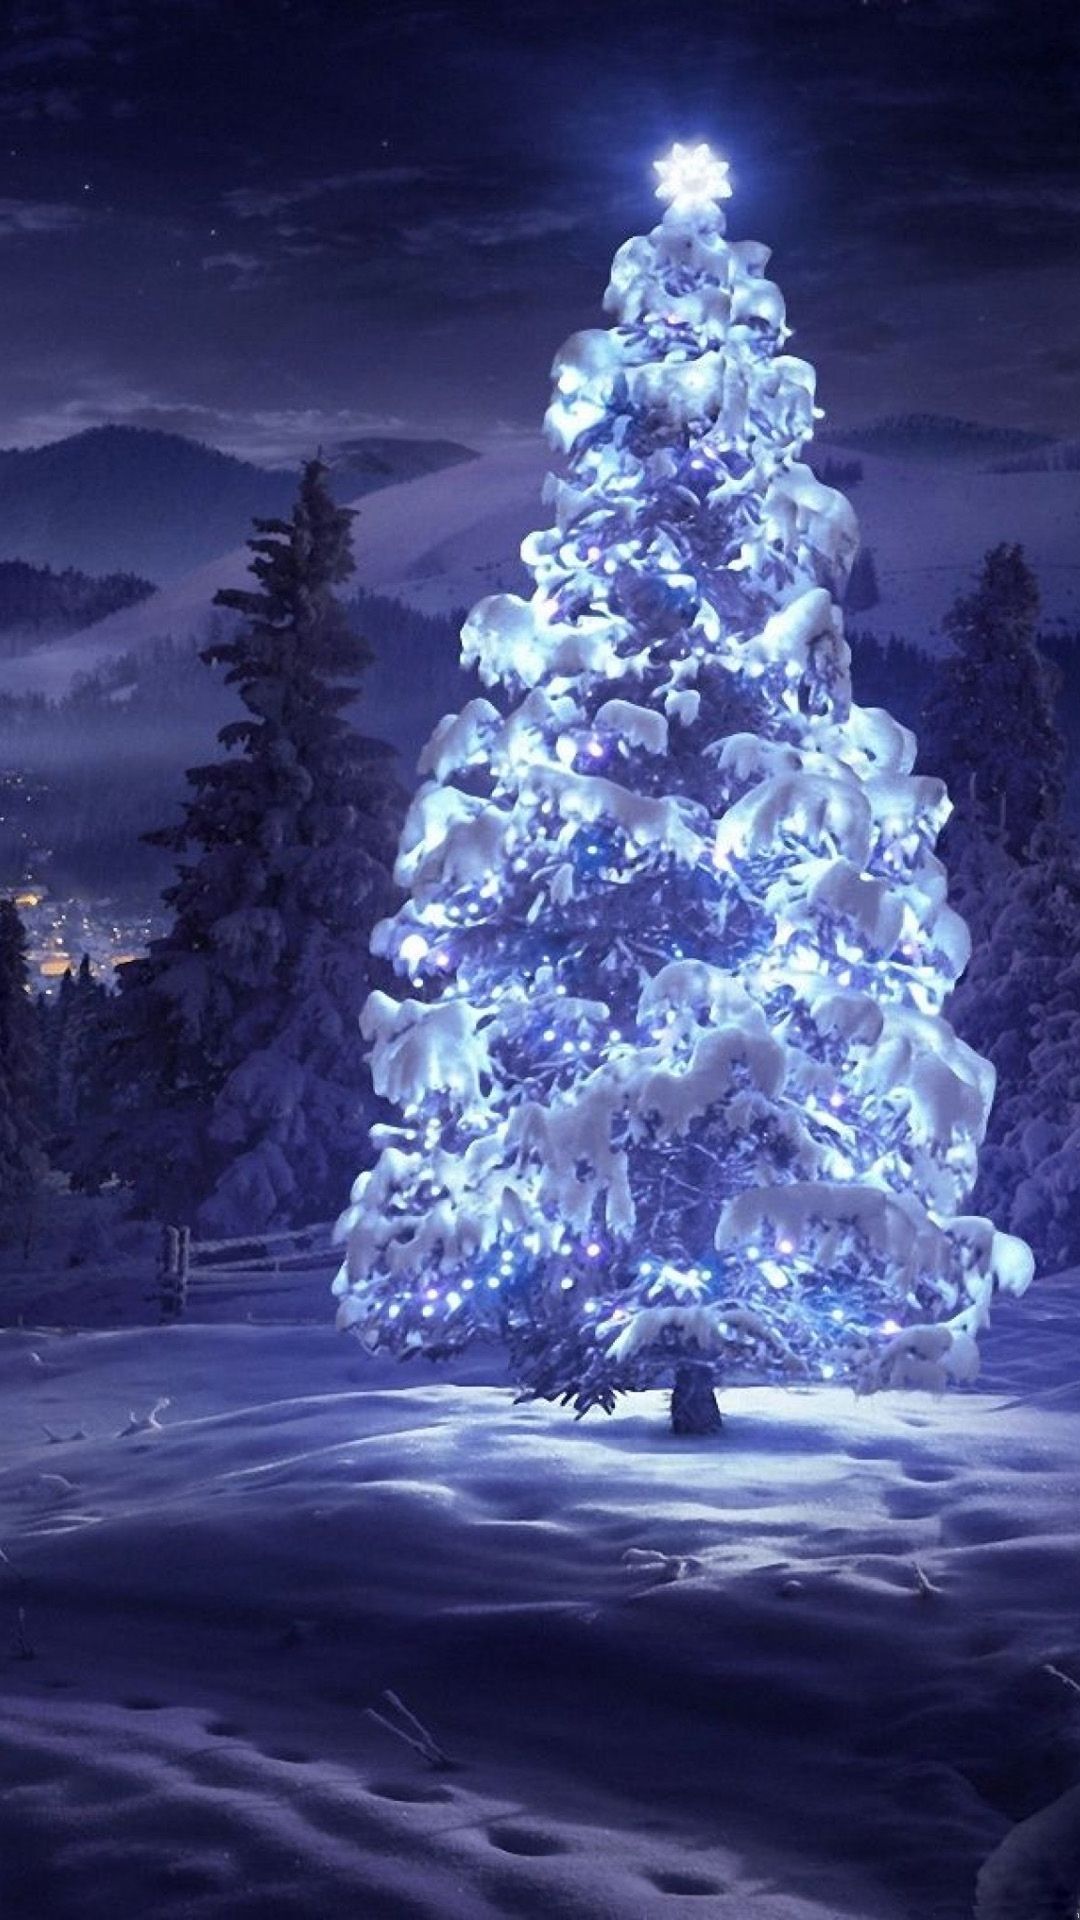 Galaxy S4 Wallpapers - Christmas Theme